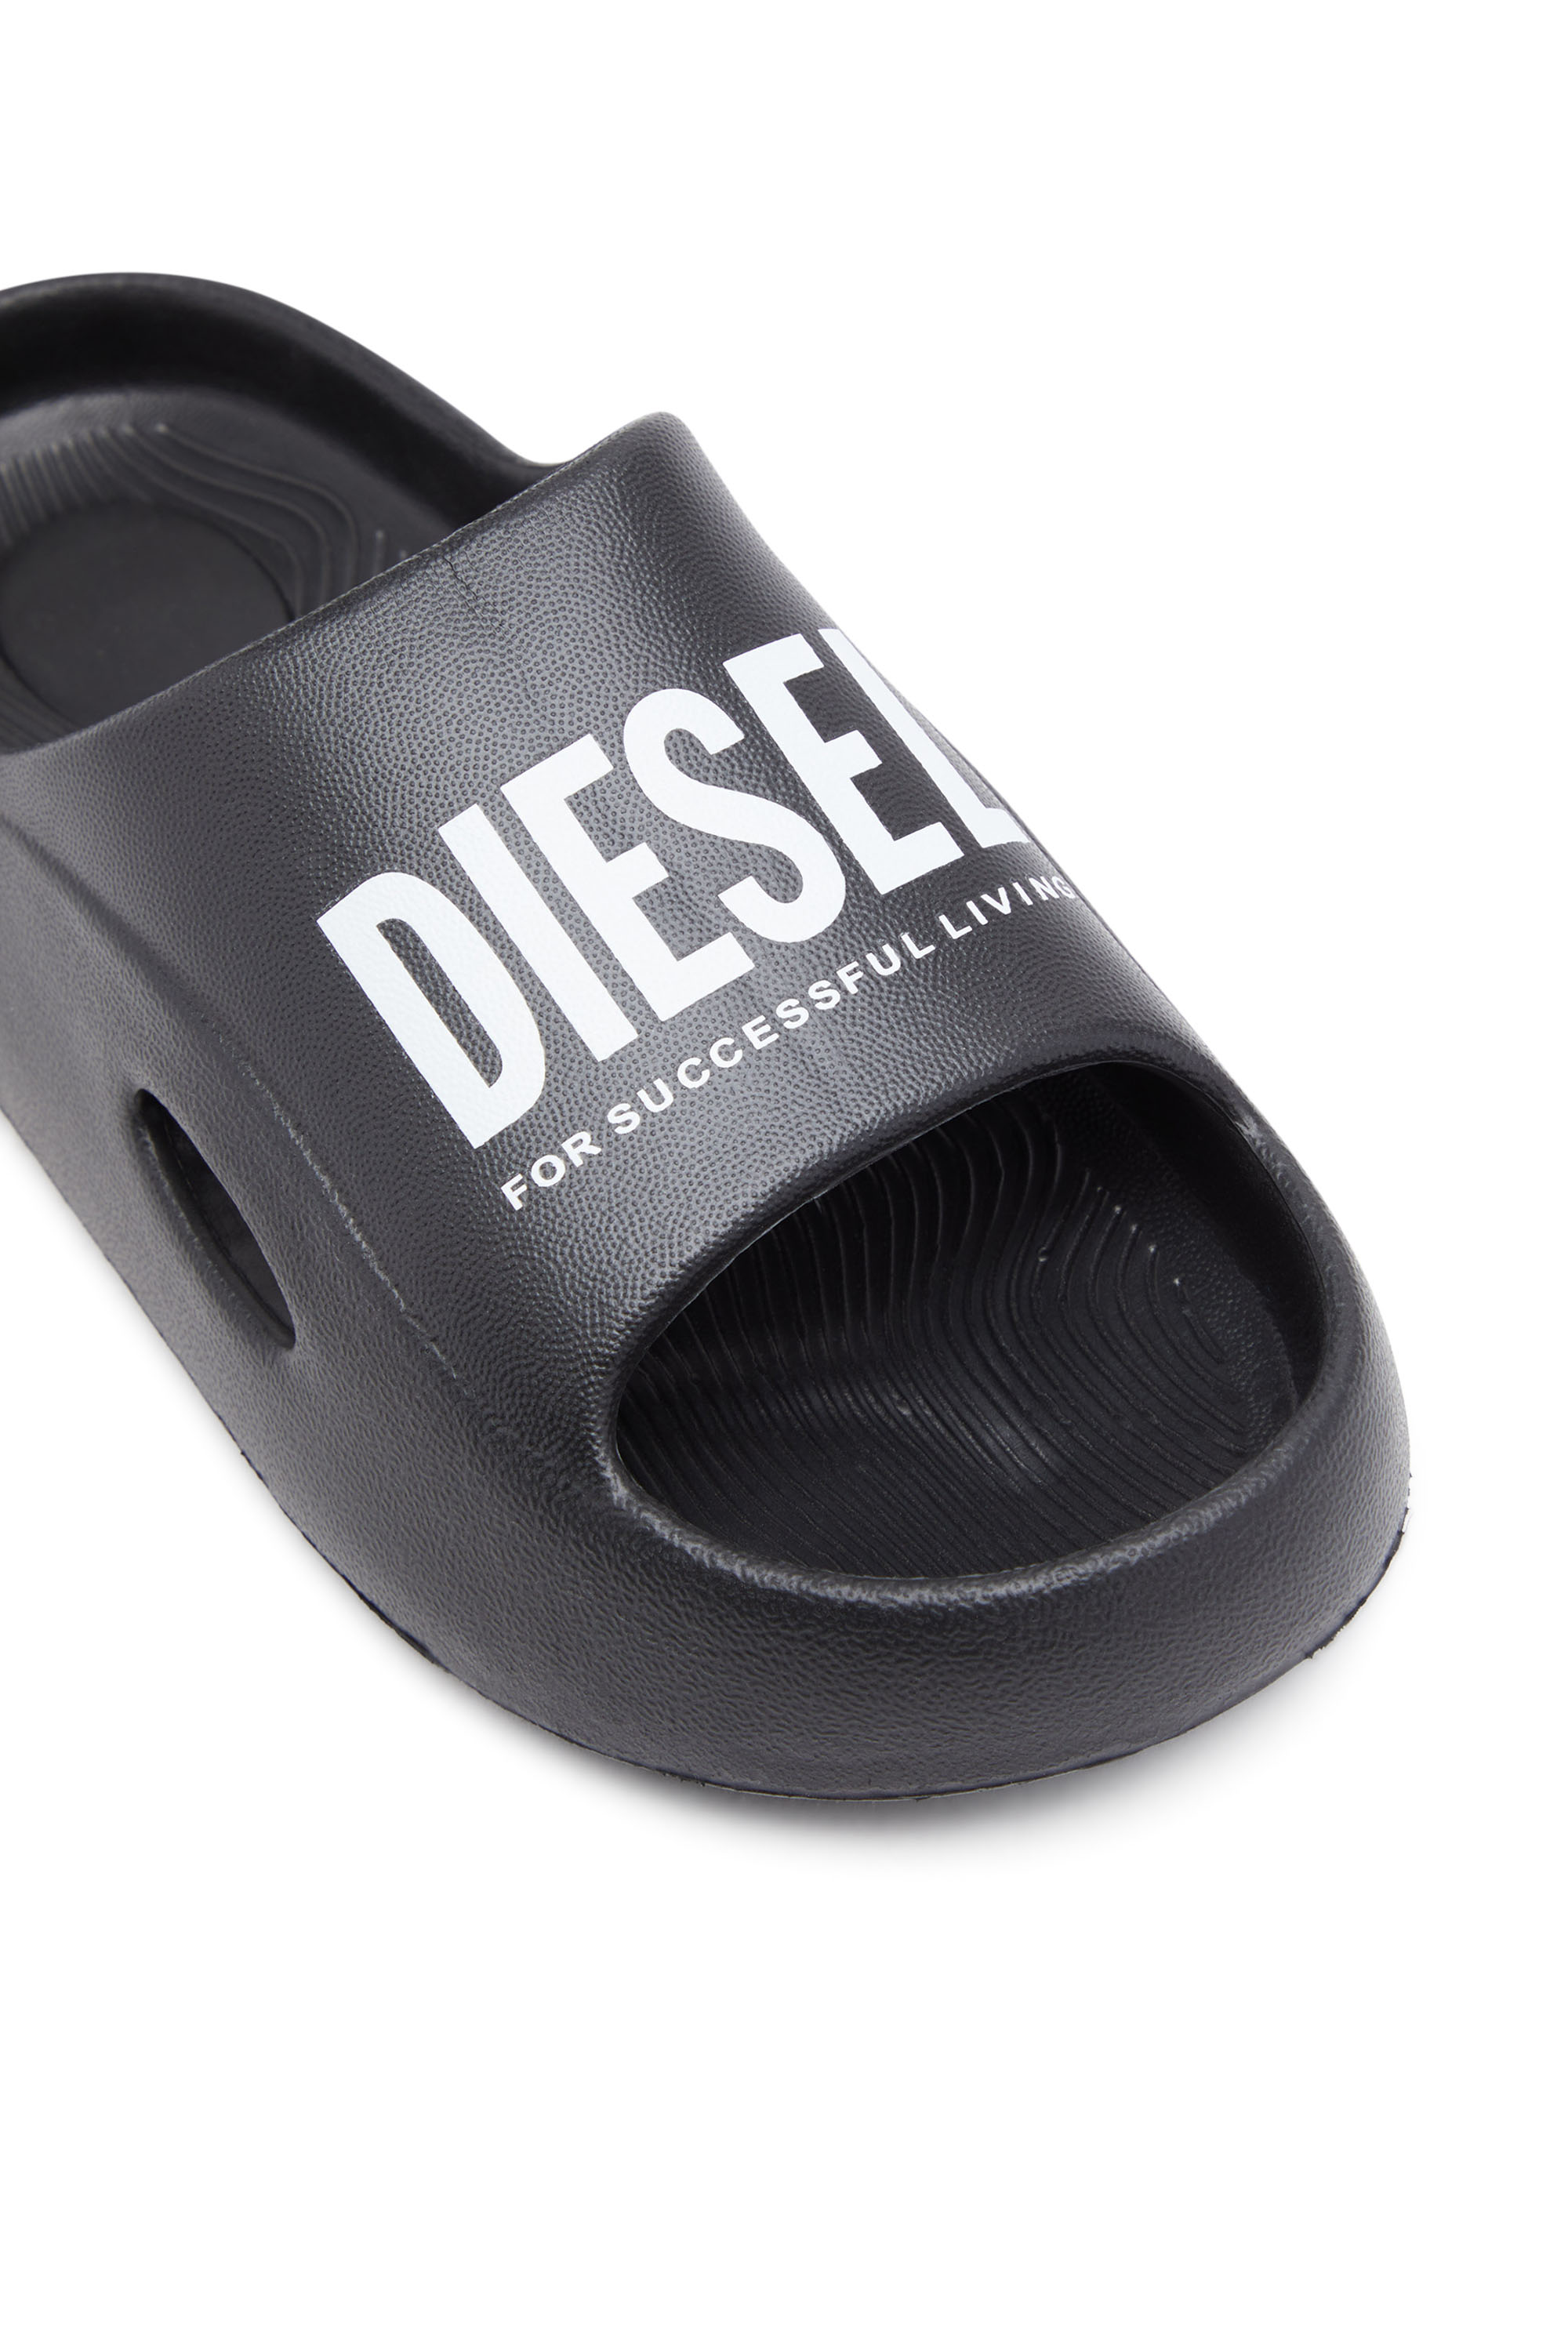 Diesel - SA-CHUNCKY, Black - Image 6